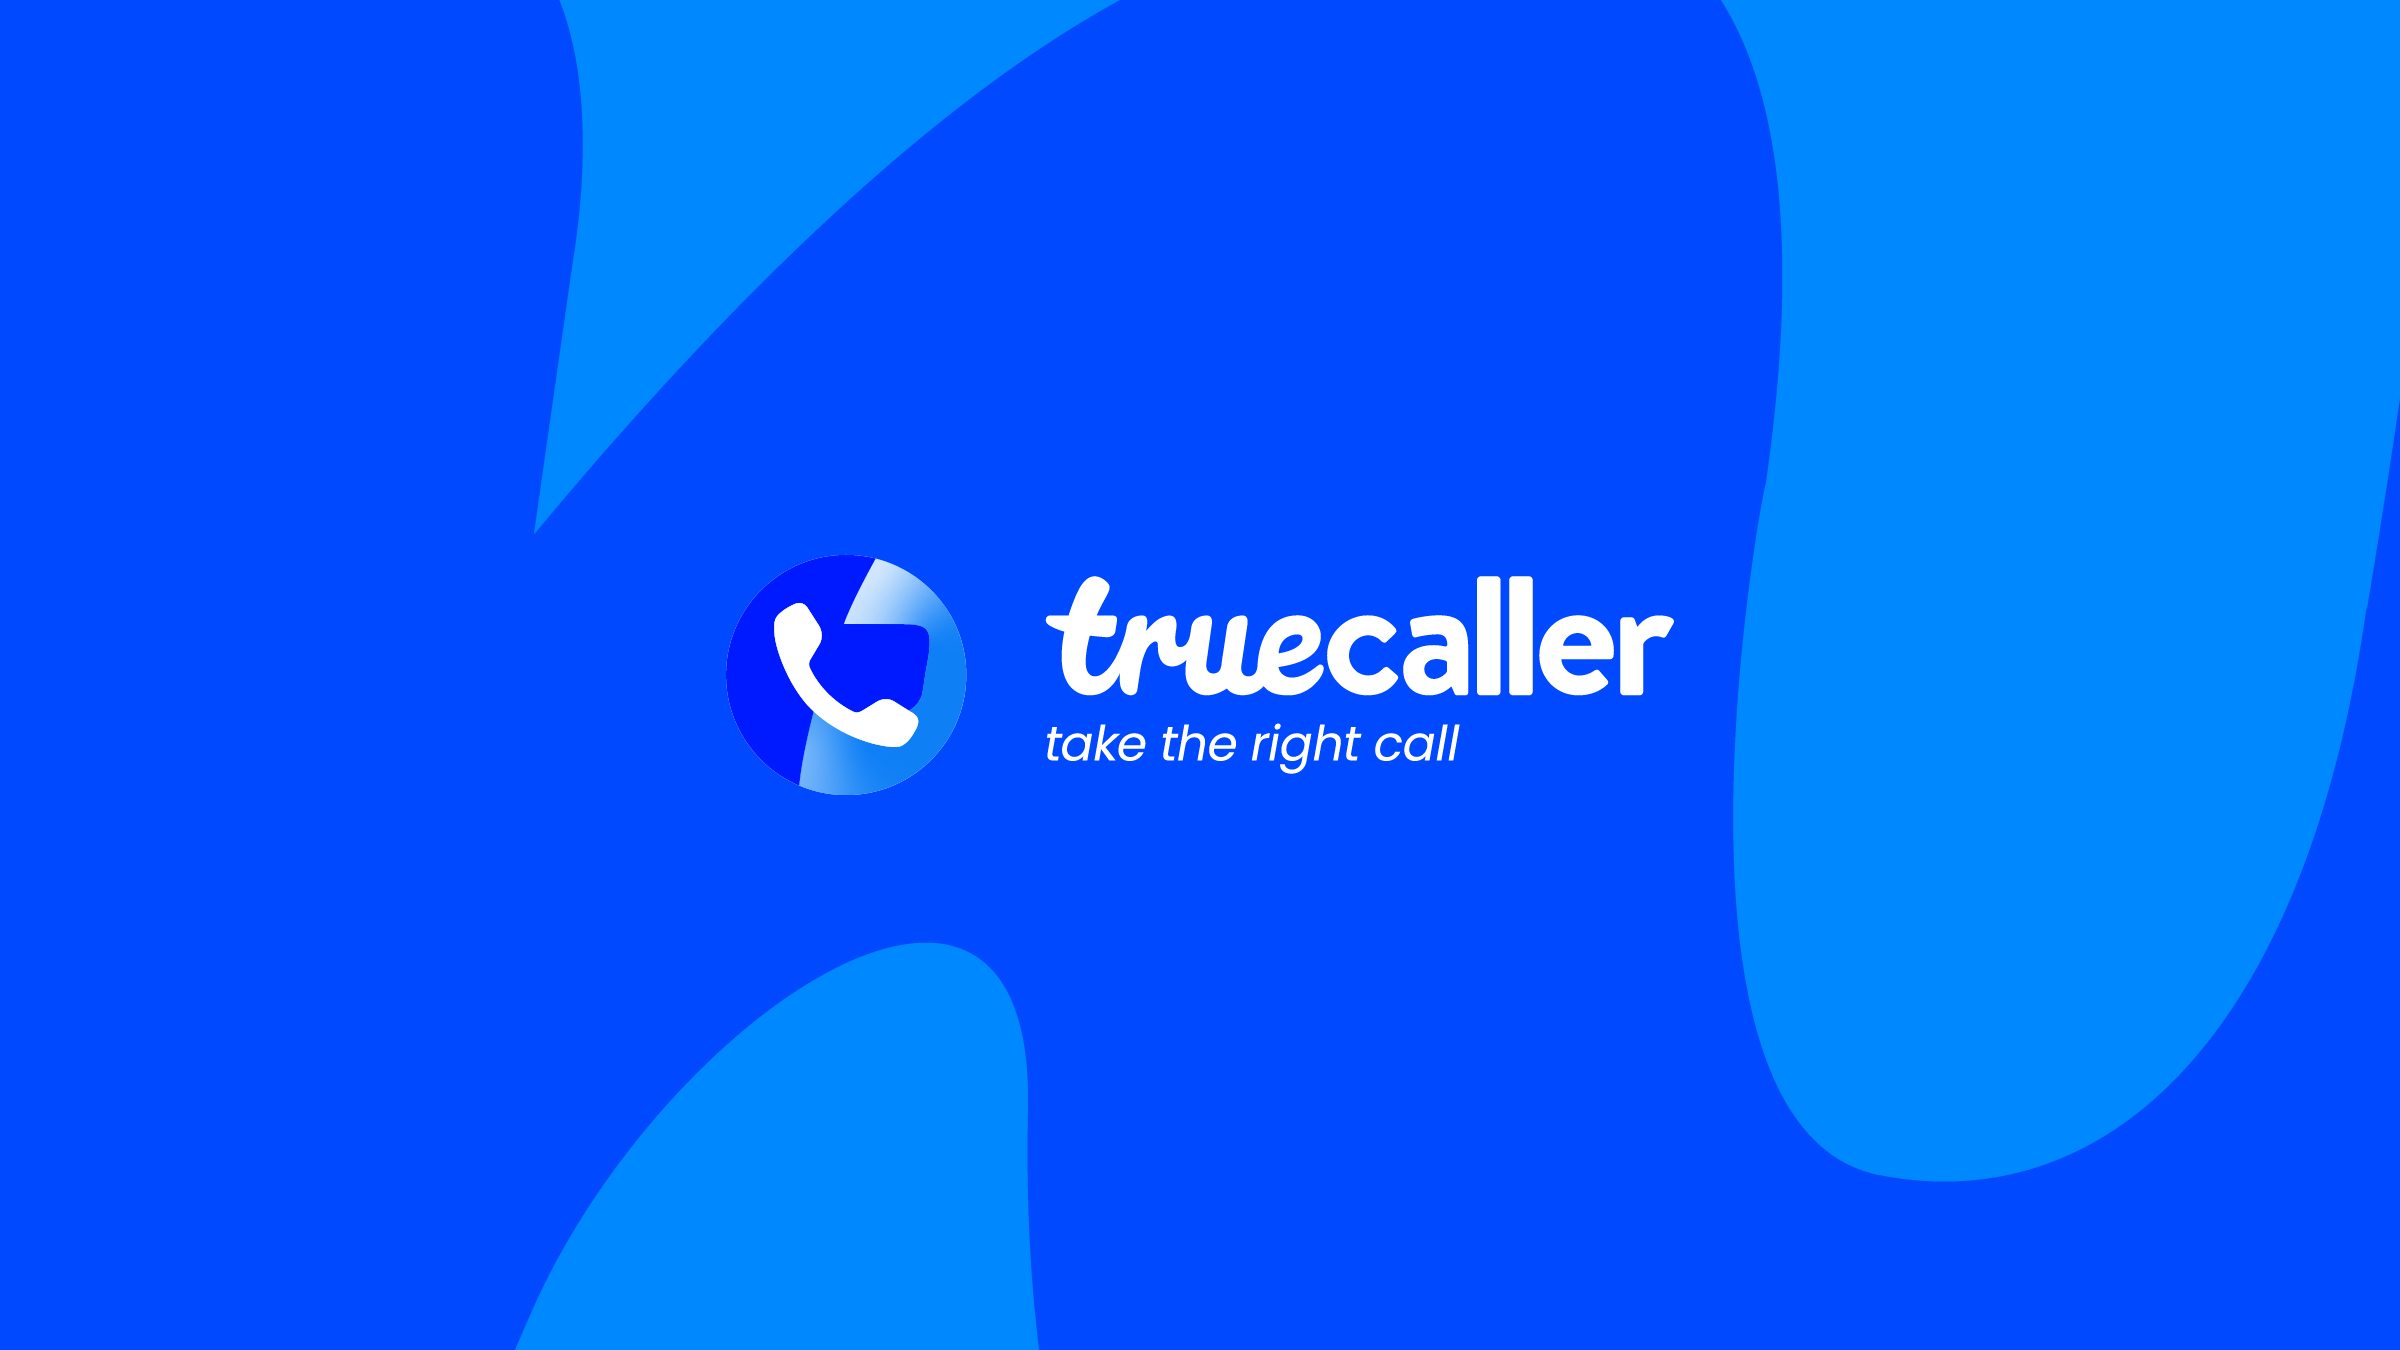 Truecaller anunció nueva imagen corporativa